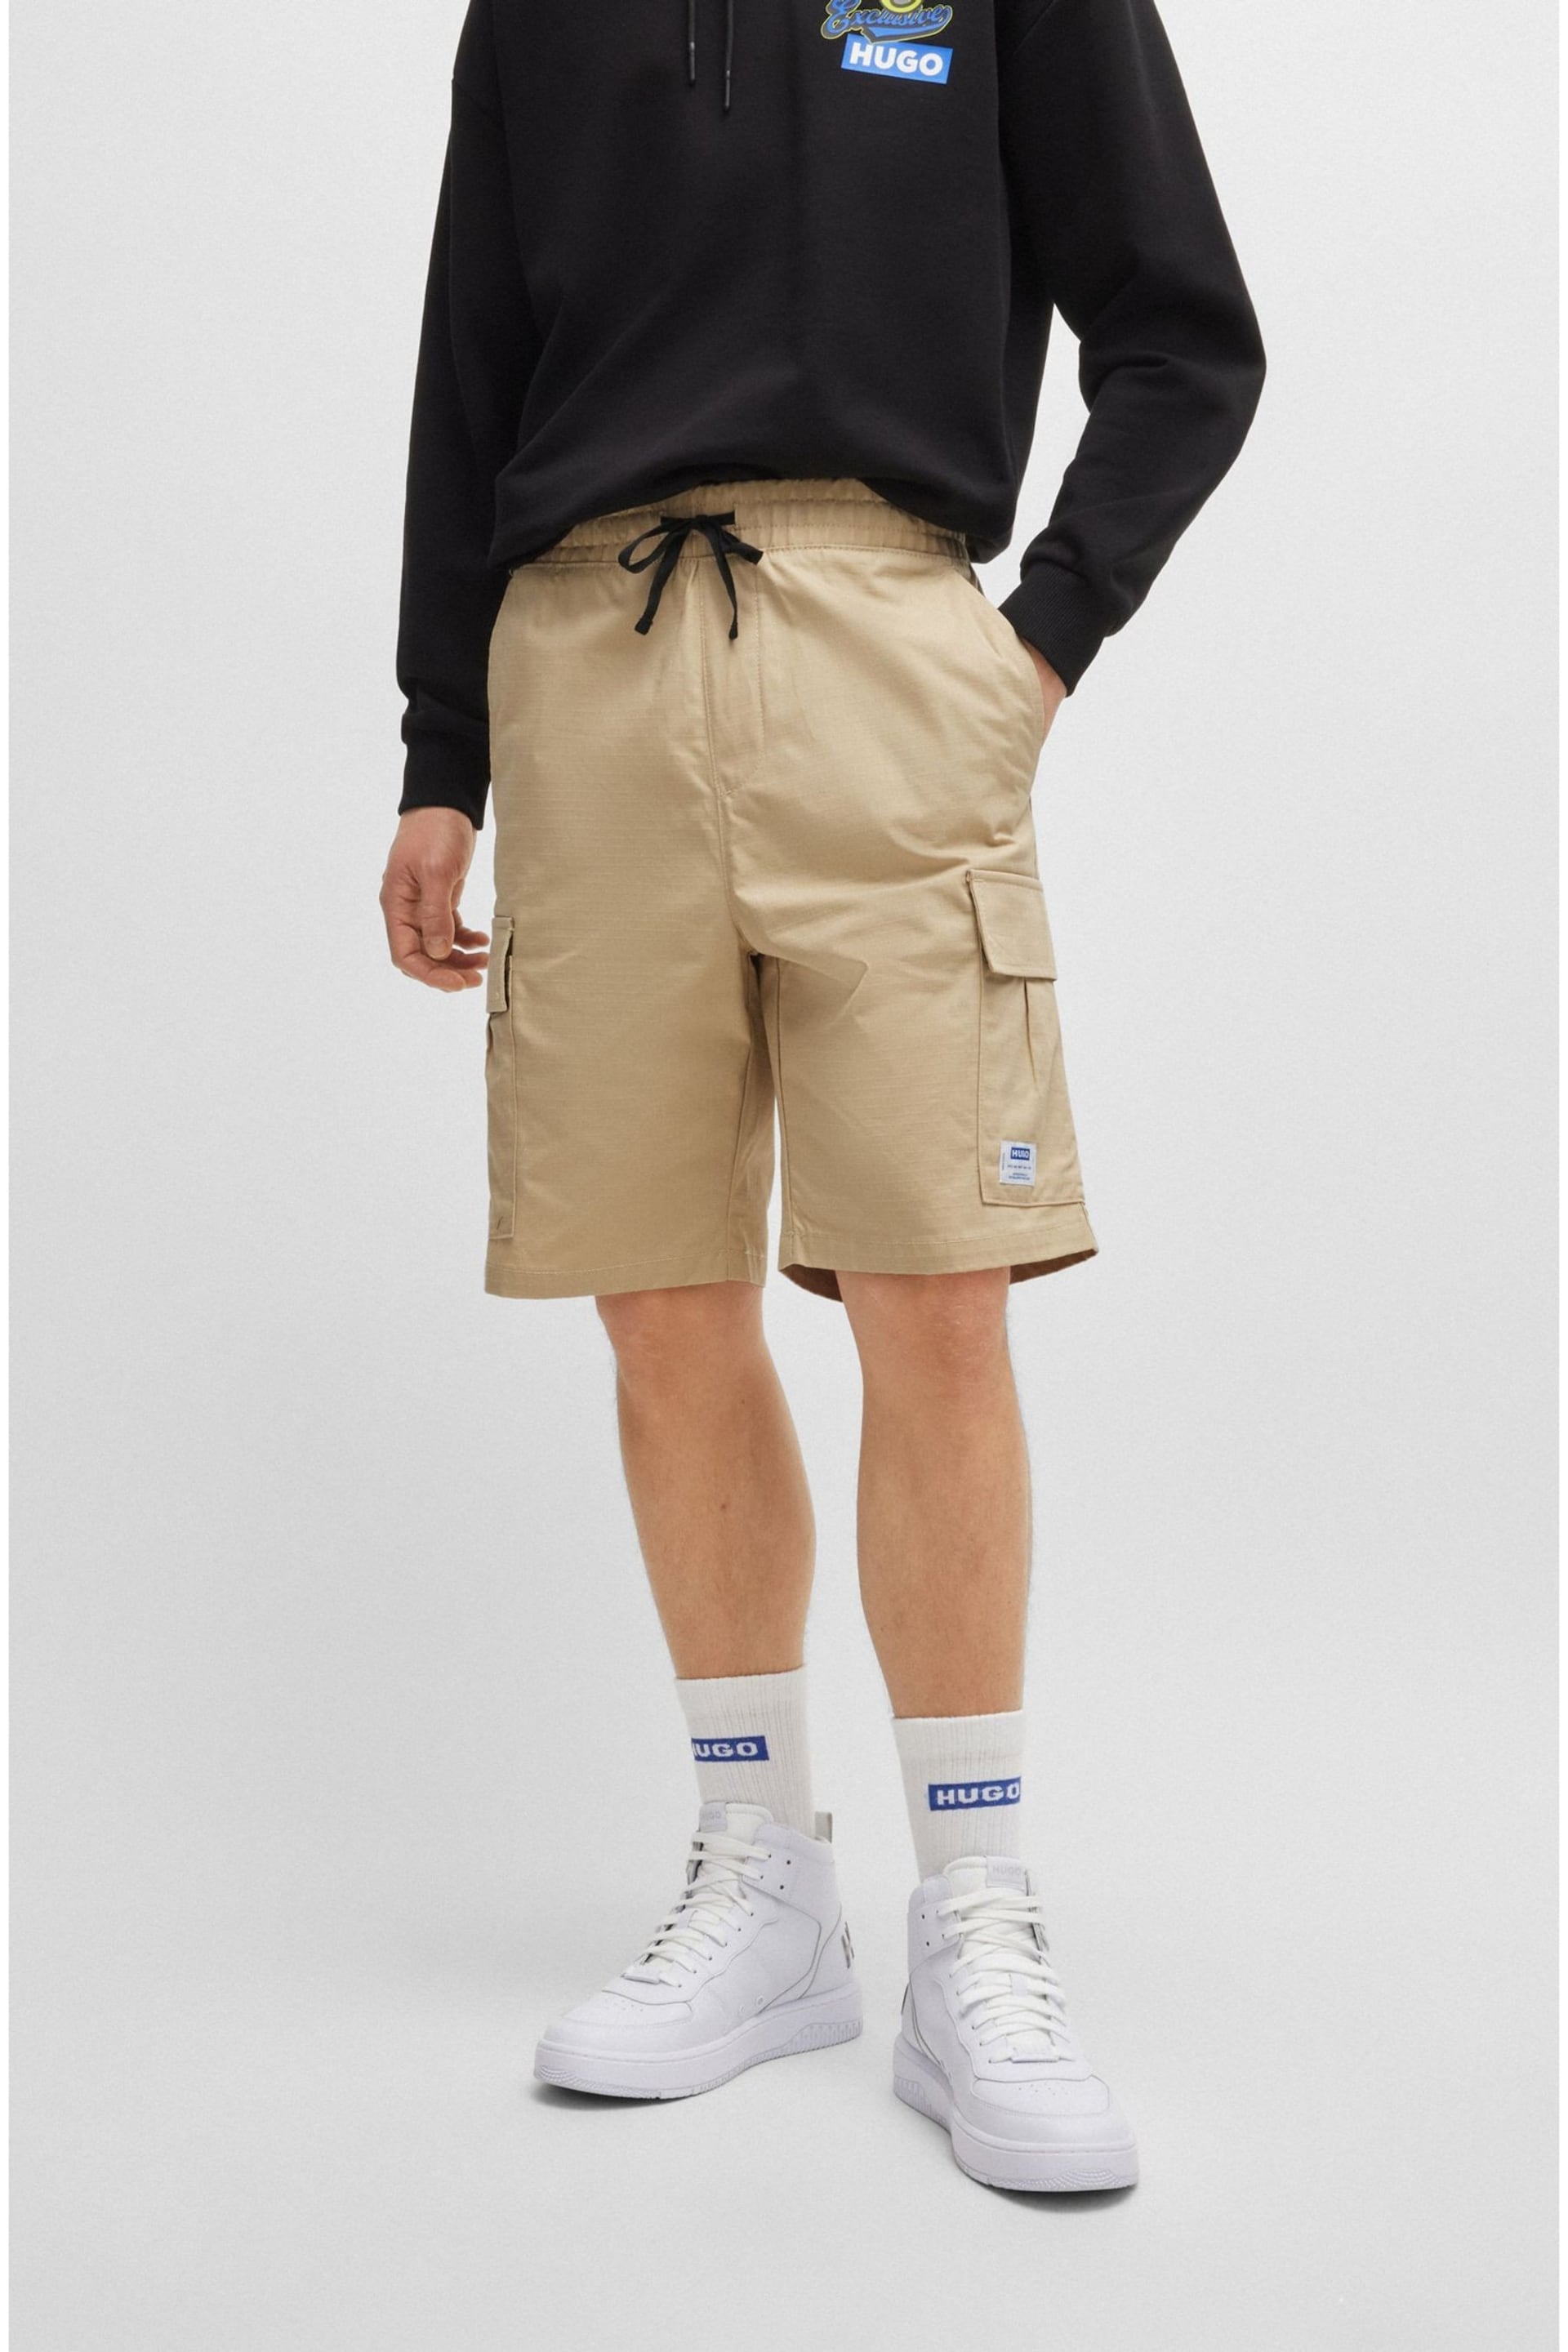 HUGO Brown Logo Patch Cotton Drawstrong Shorts - Image 3 of 5